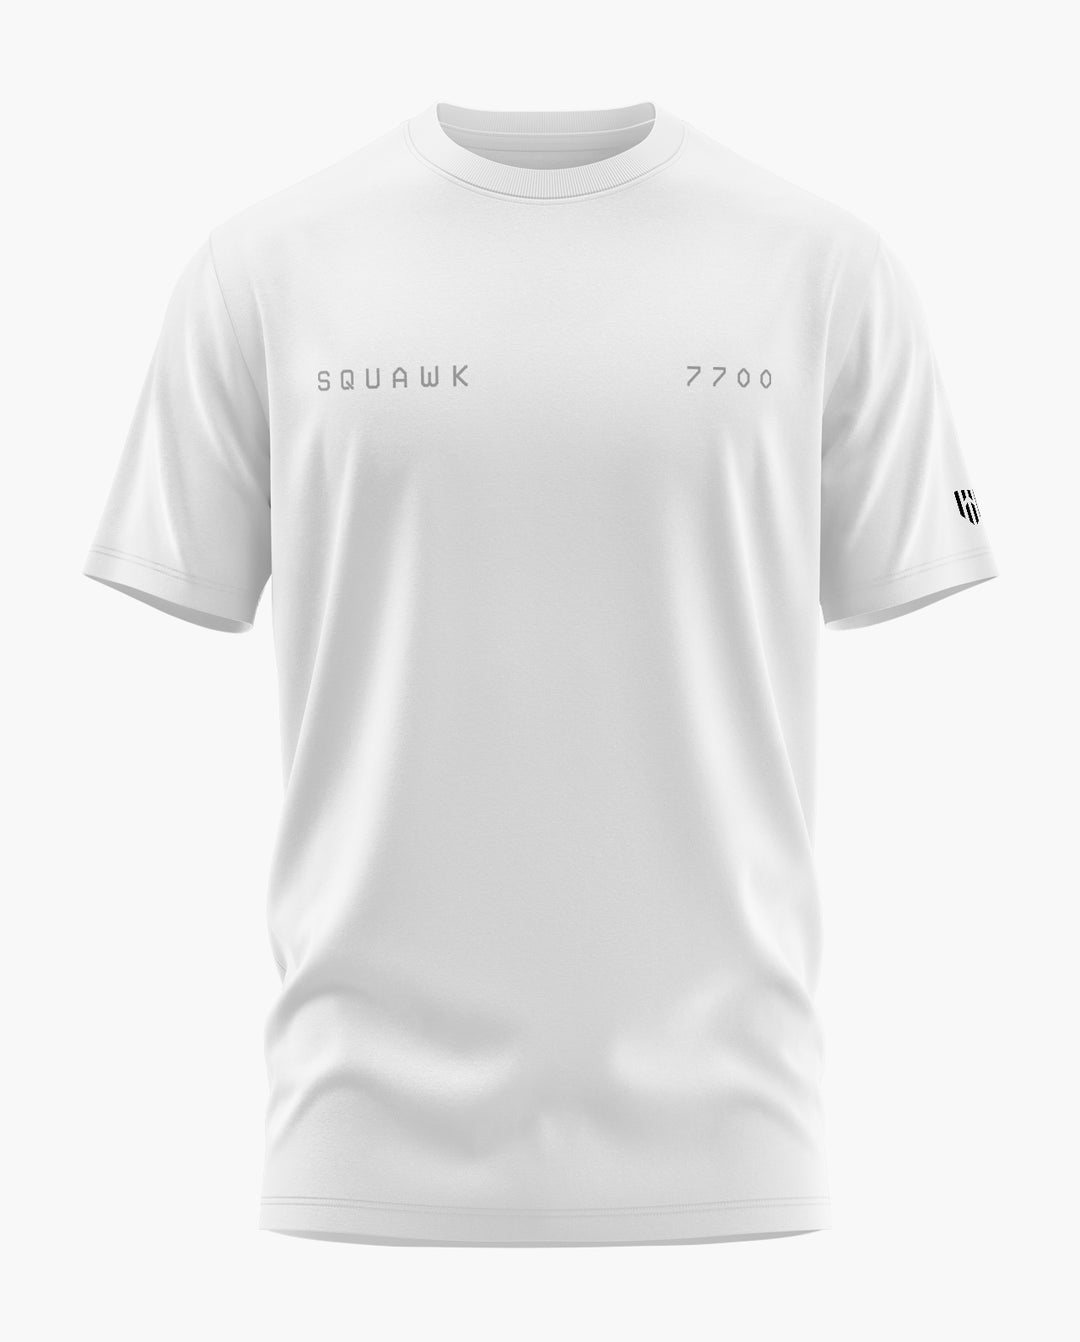 SQUAWK 7700 T-Shirt